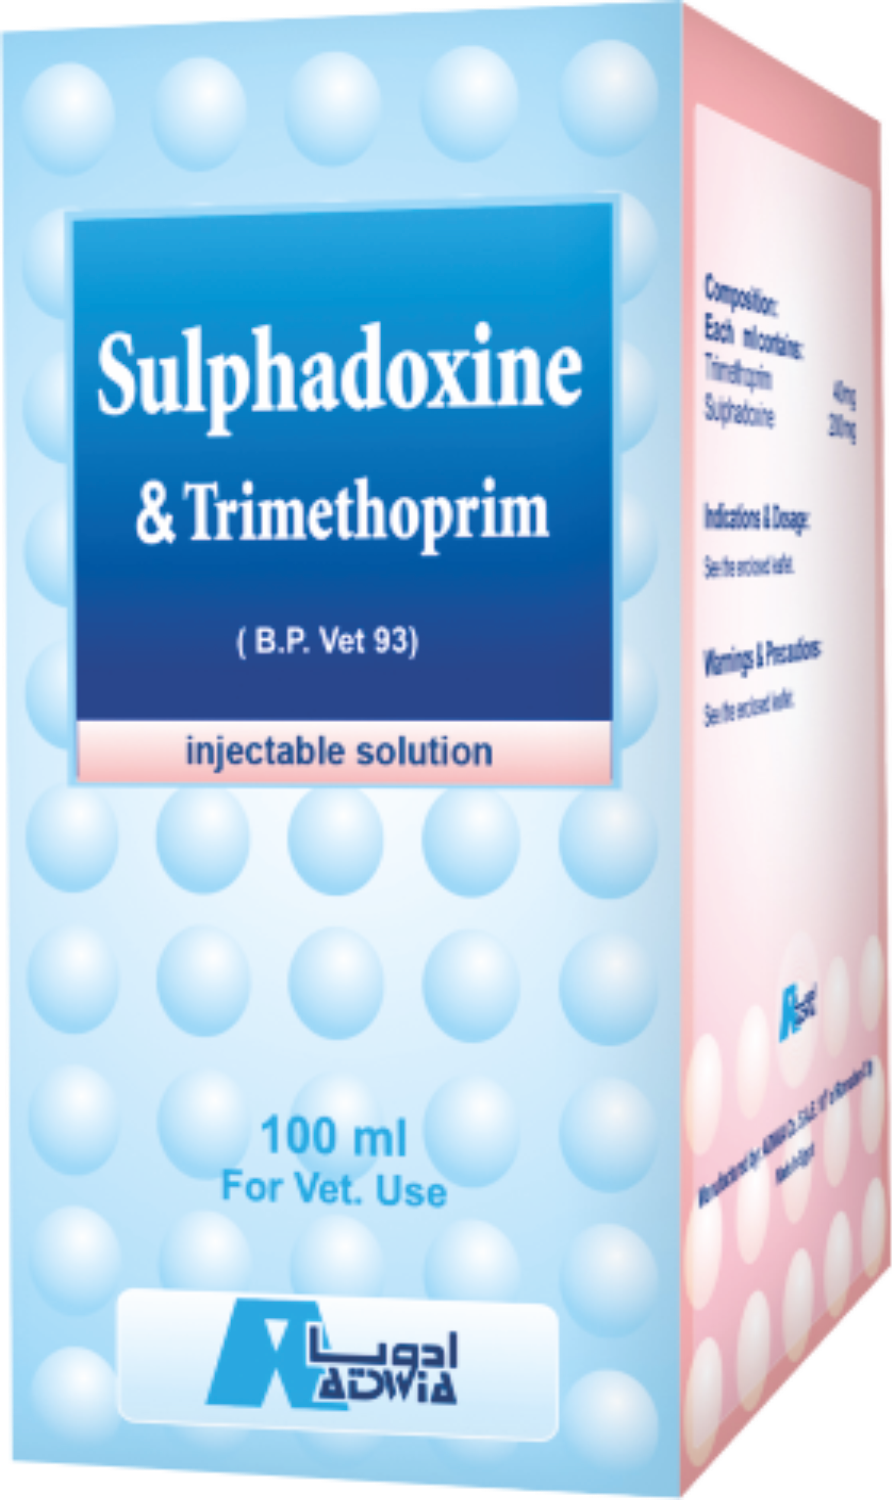  Sulphadoxine & trimethoprim